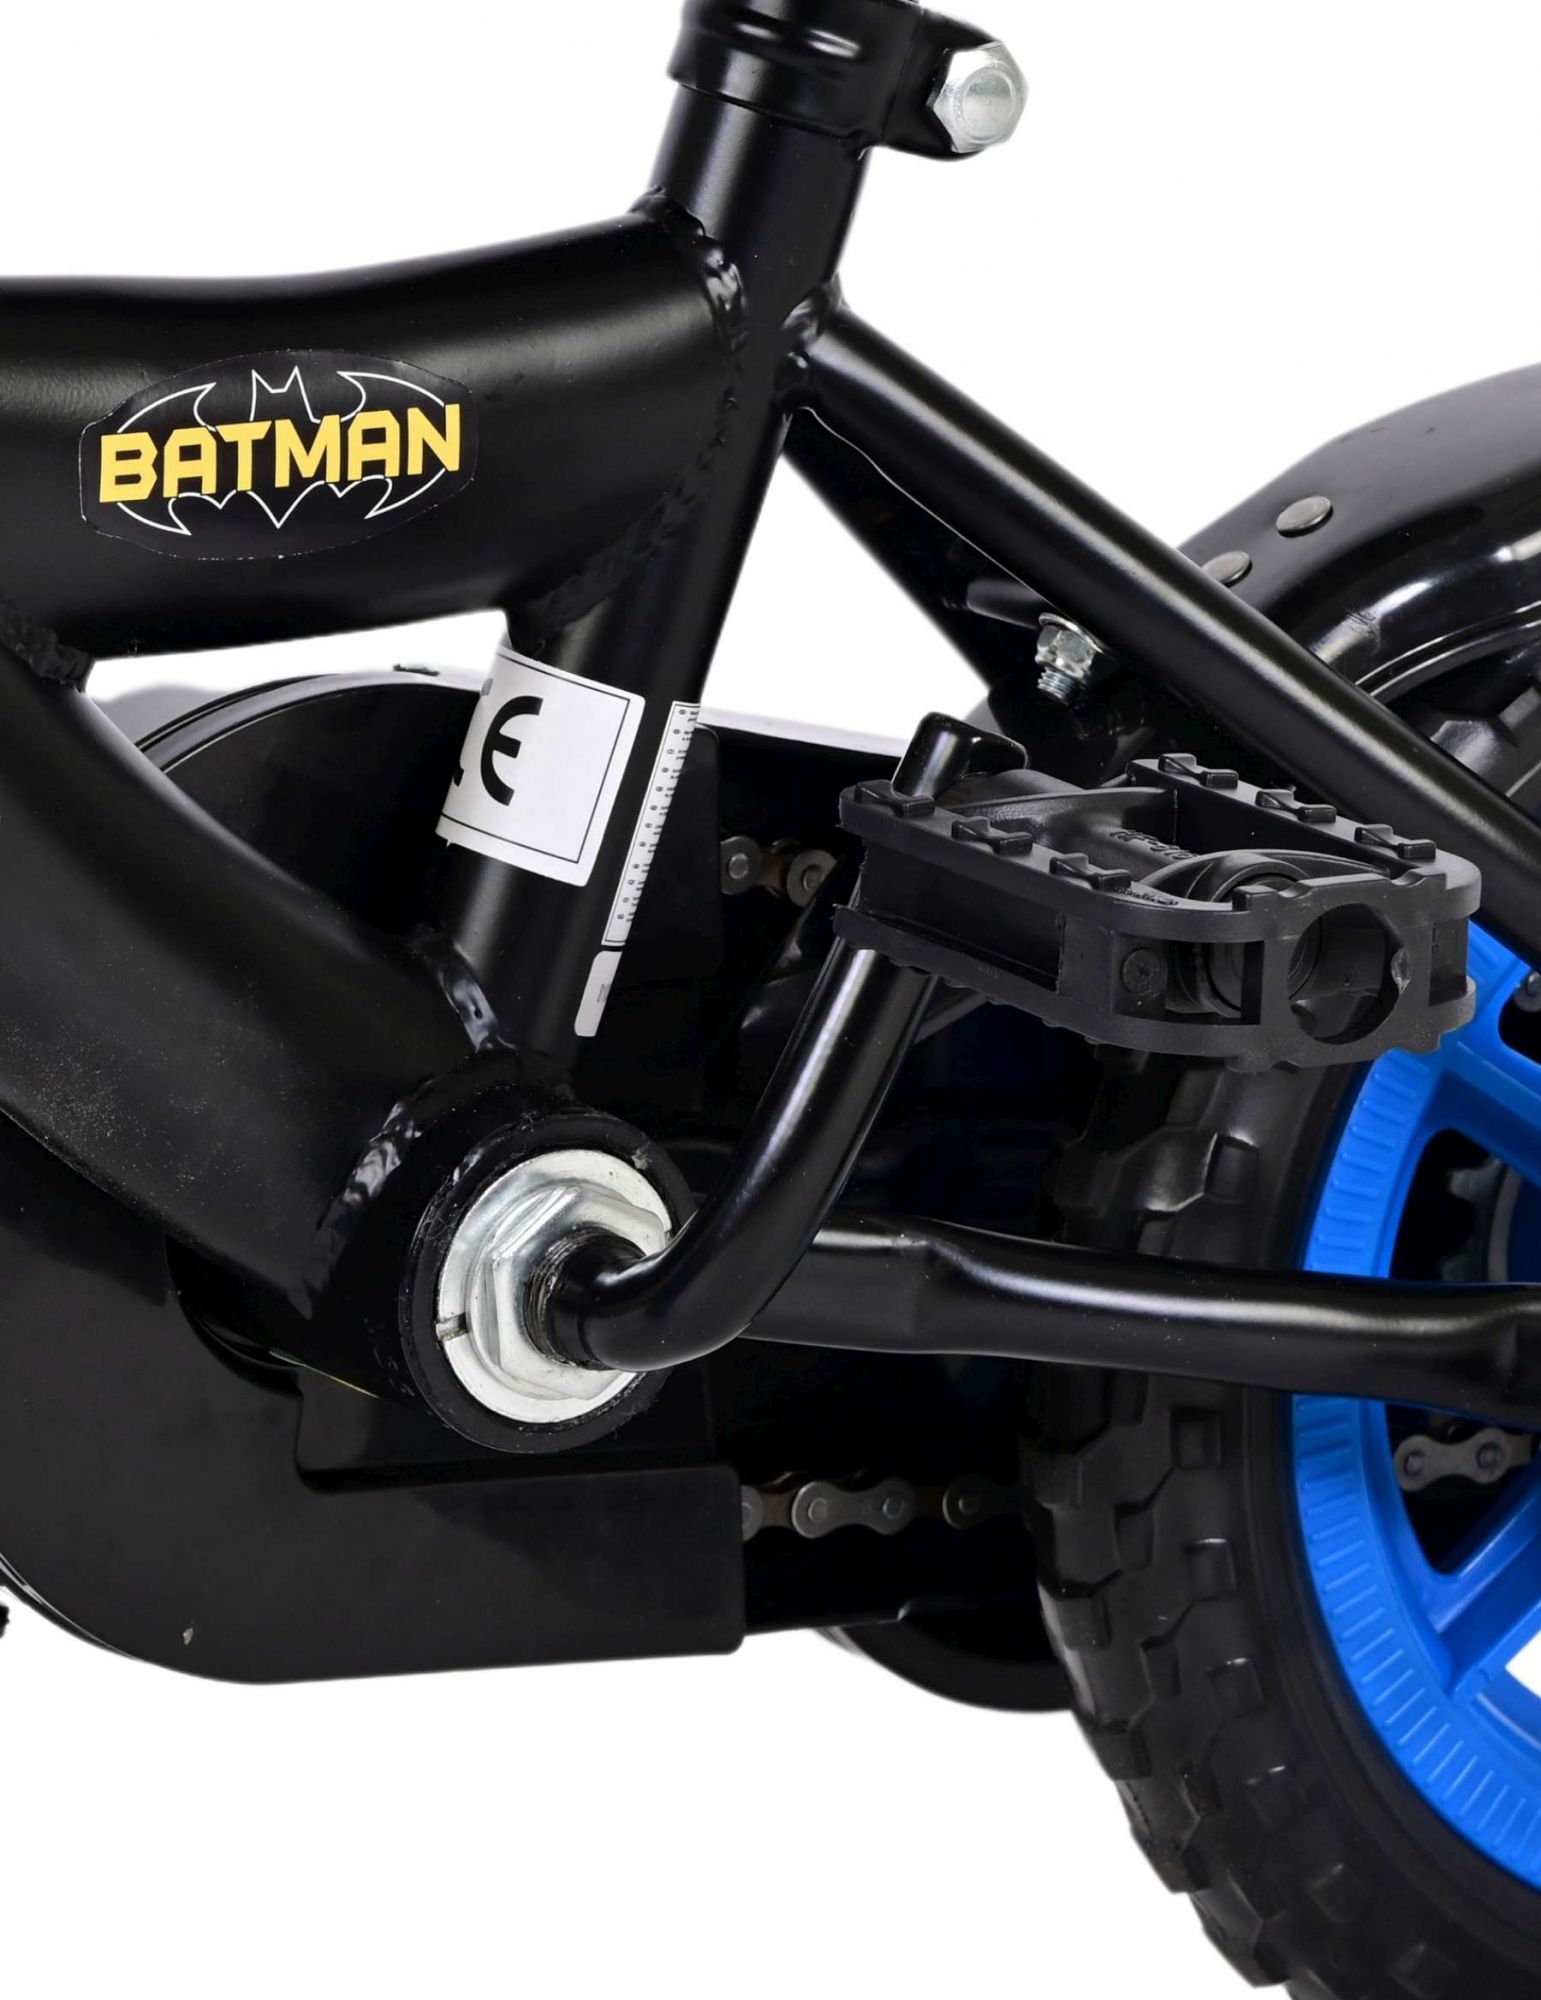 Kinderfahrrad Batman Fahrrad für Jungen 10 Zoll Kinderrad in Schwarz